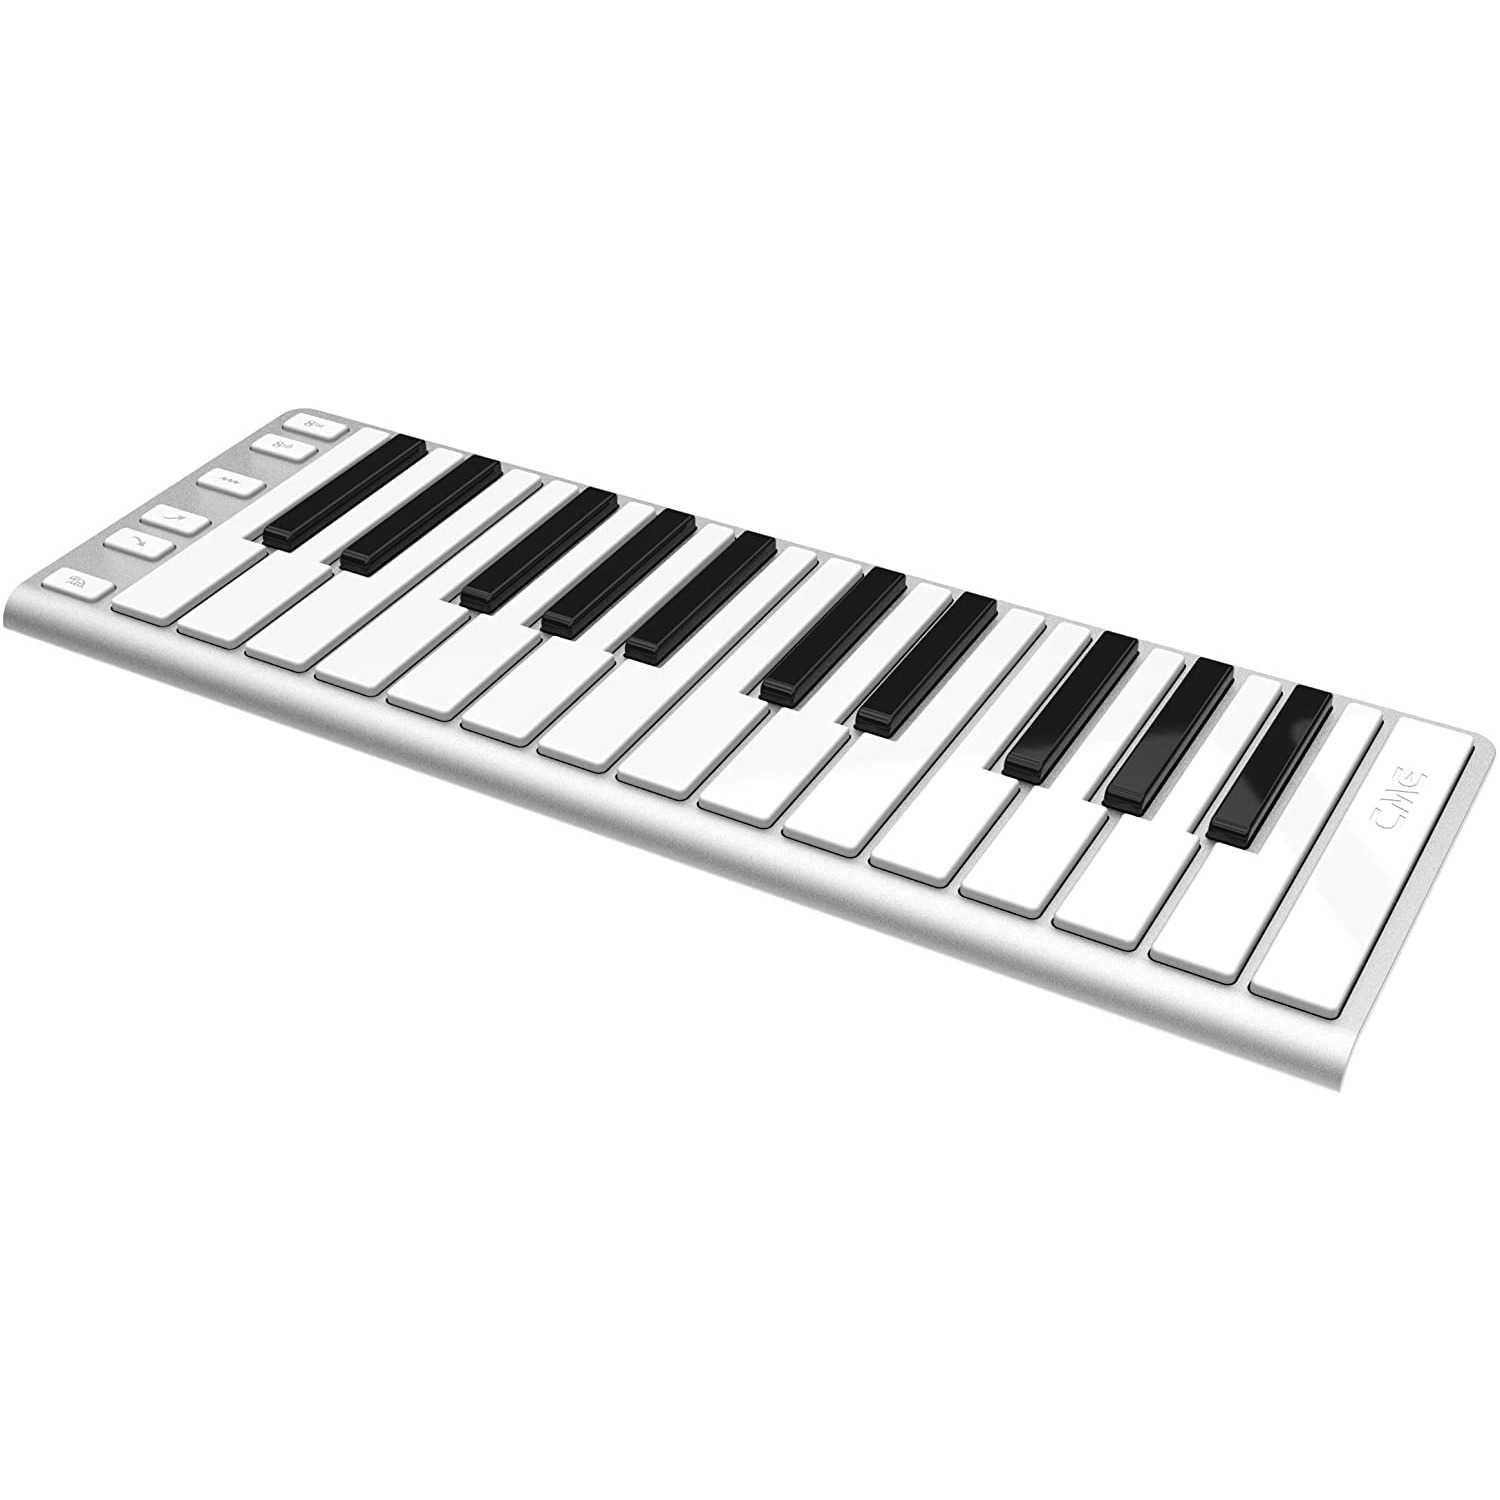 15 лучших midi-клавиатур